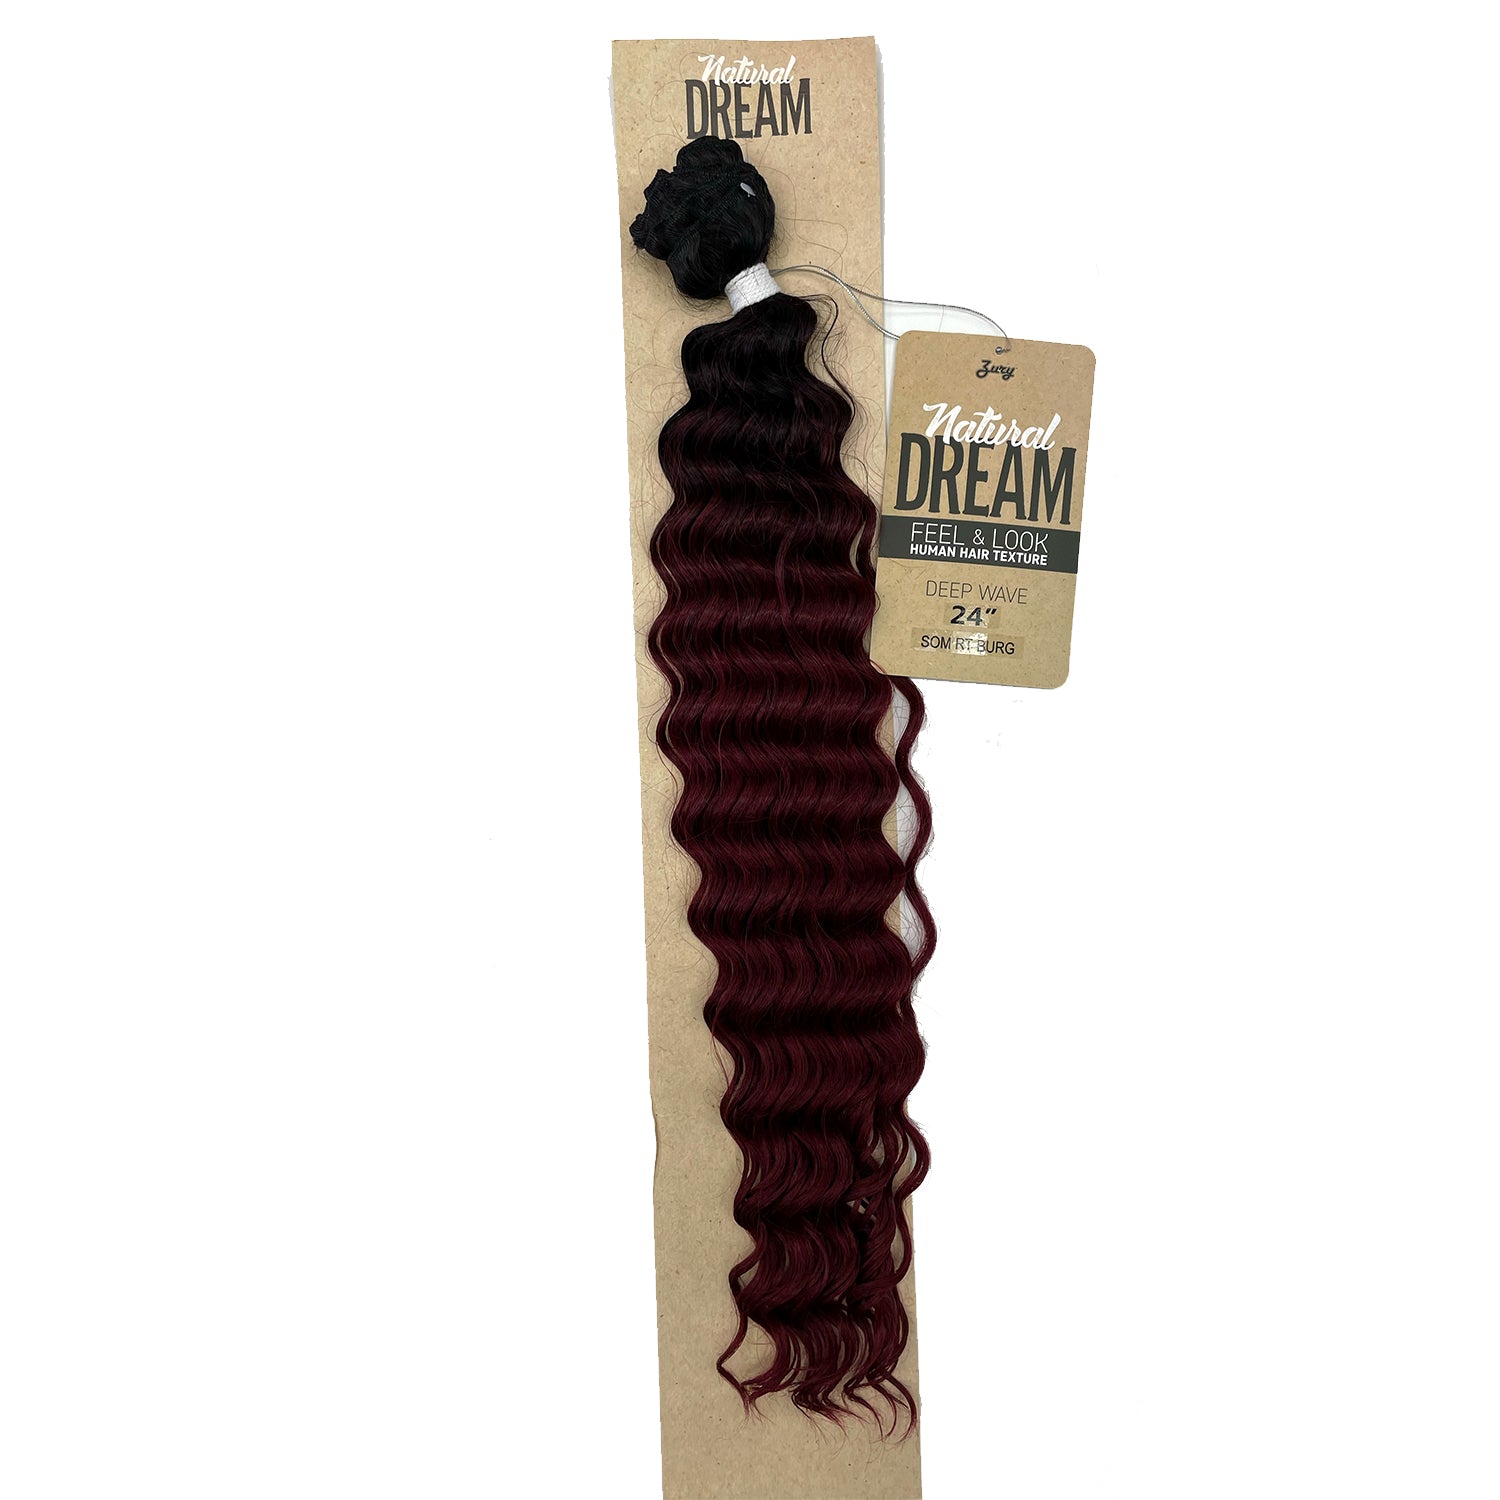 Zury Natural Dream Feel & Look Hair Extension Bundle, Deep Wave 24" som rt burg